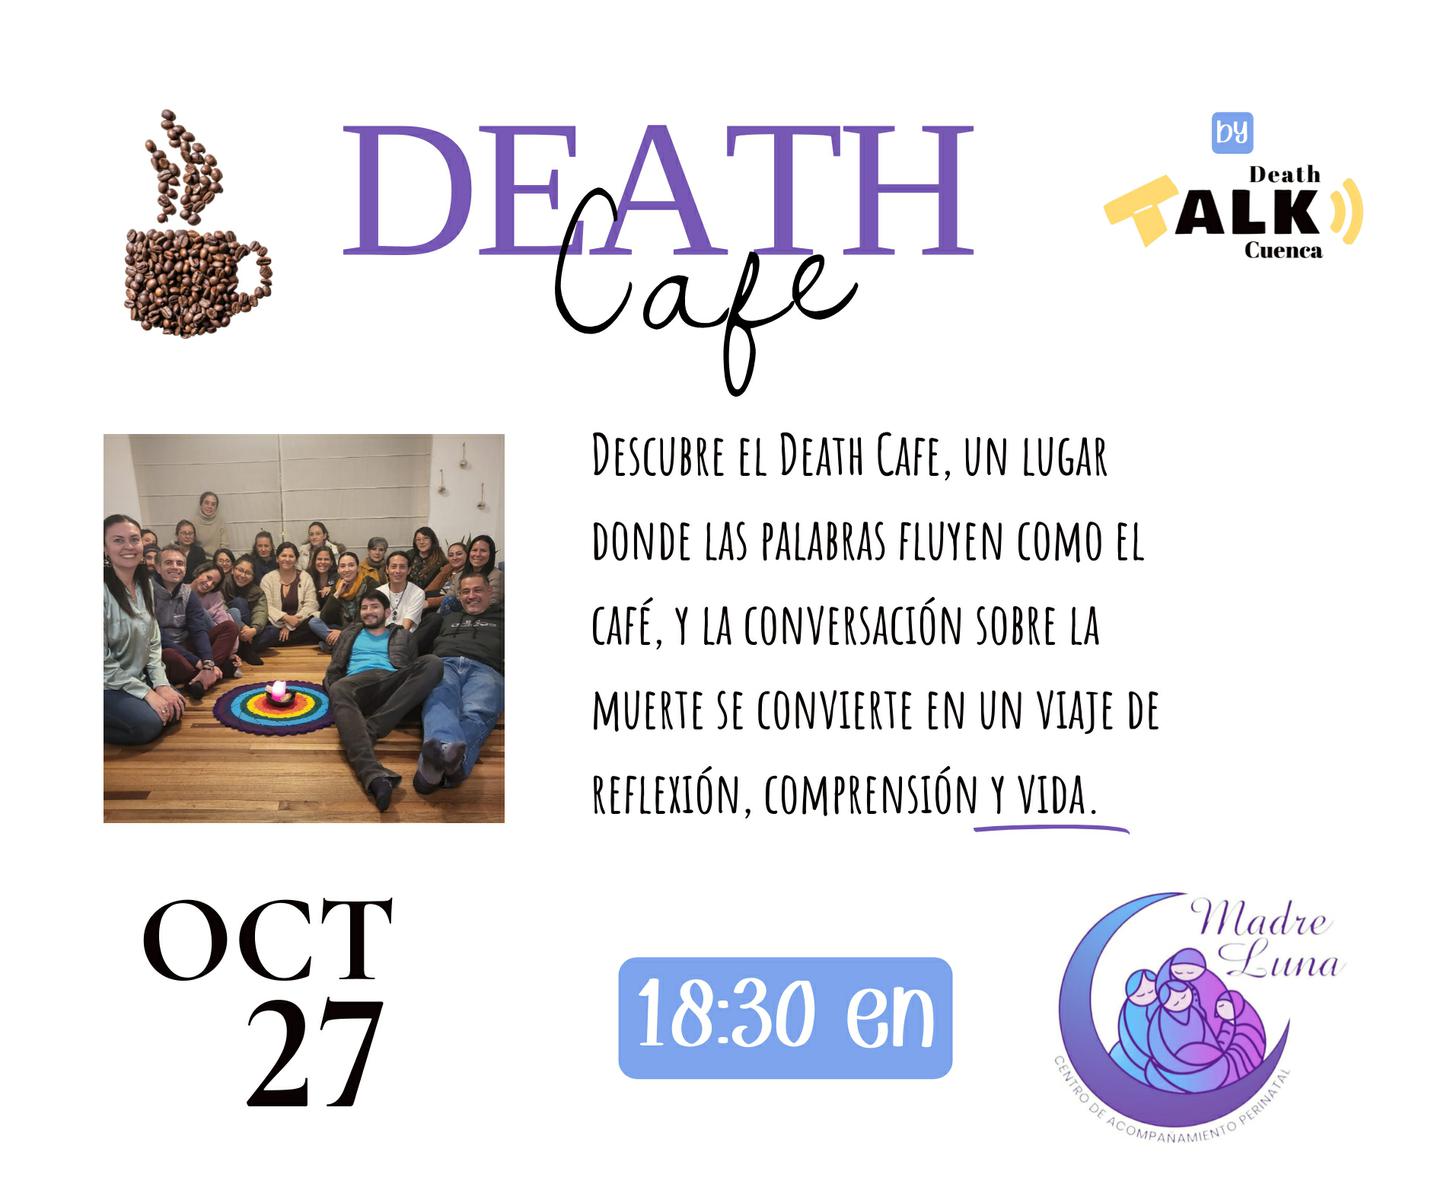 Death Cafe (Spanish)